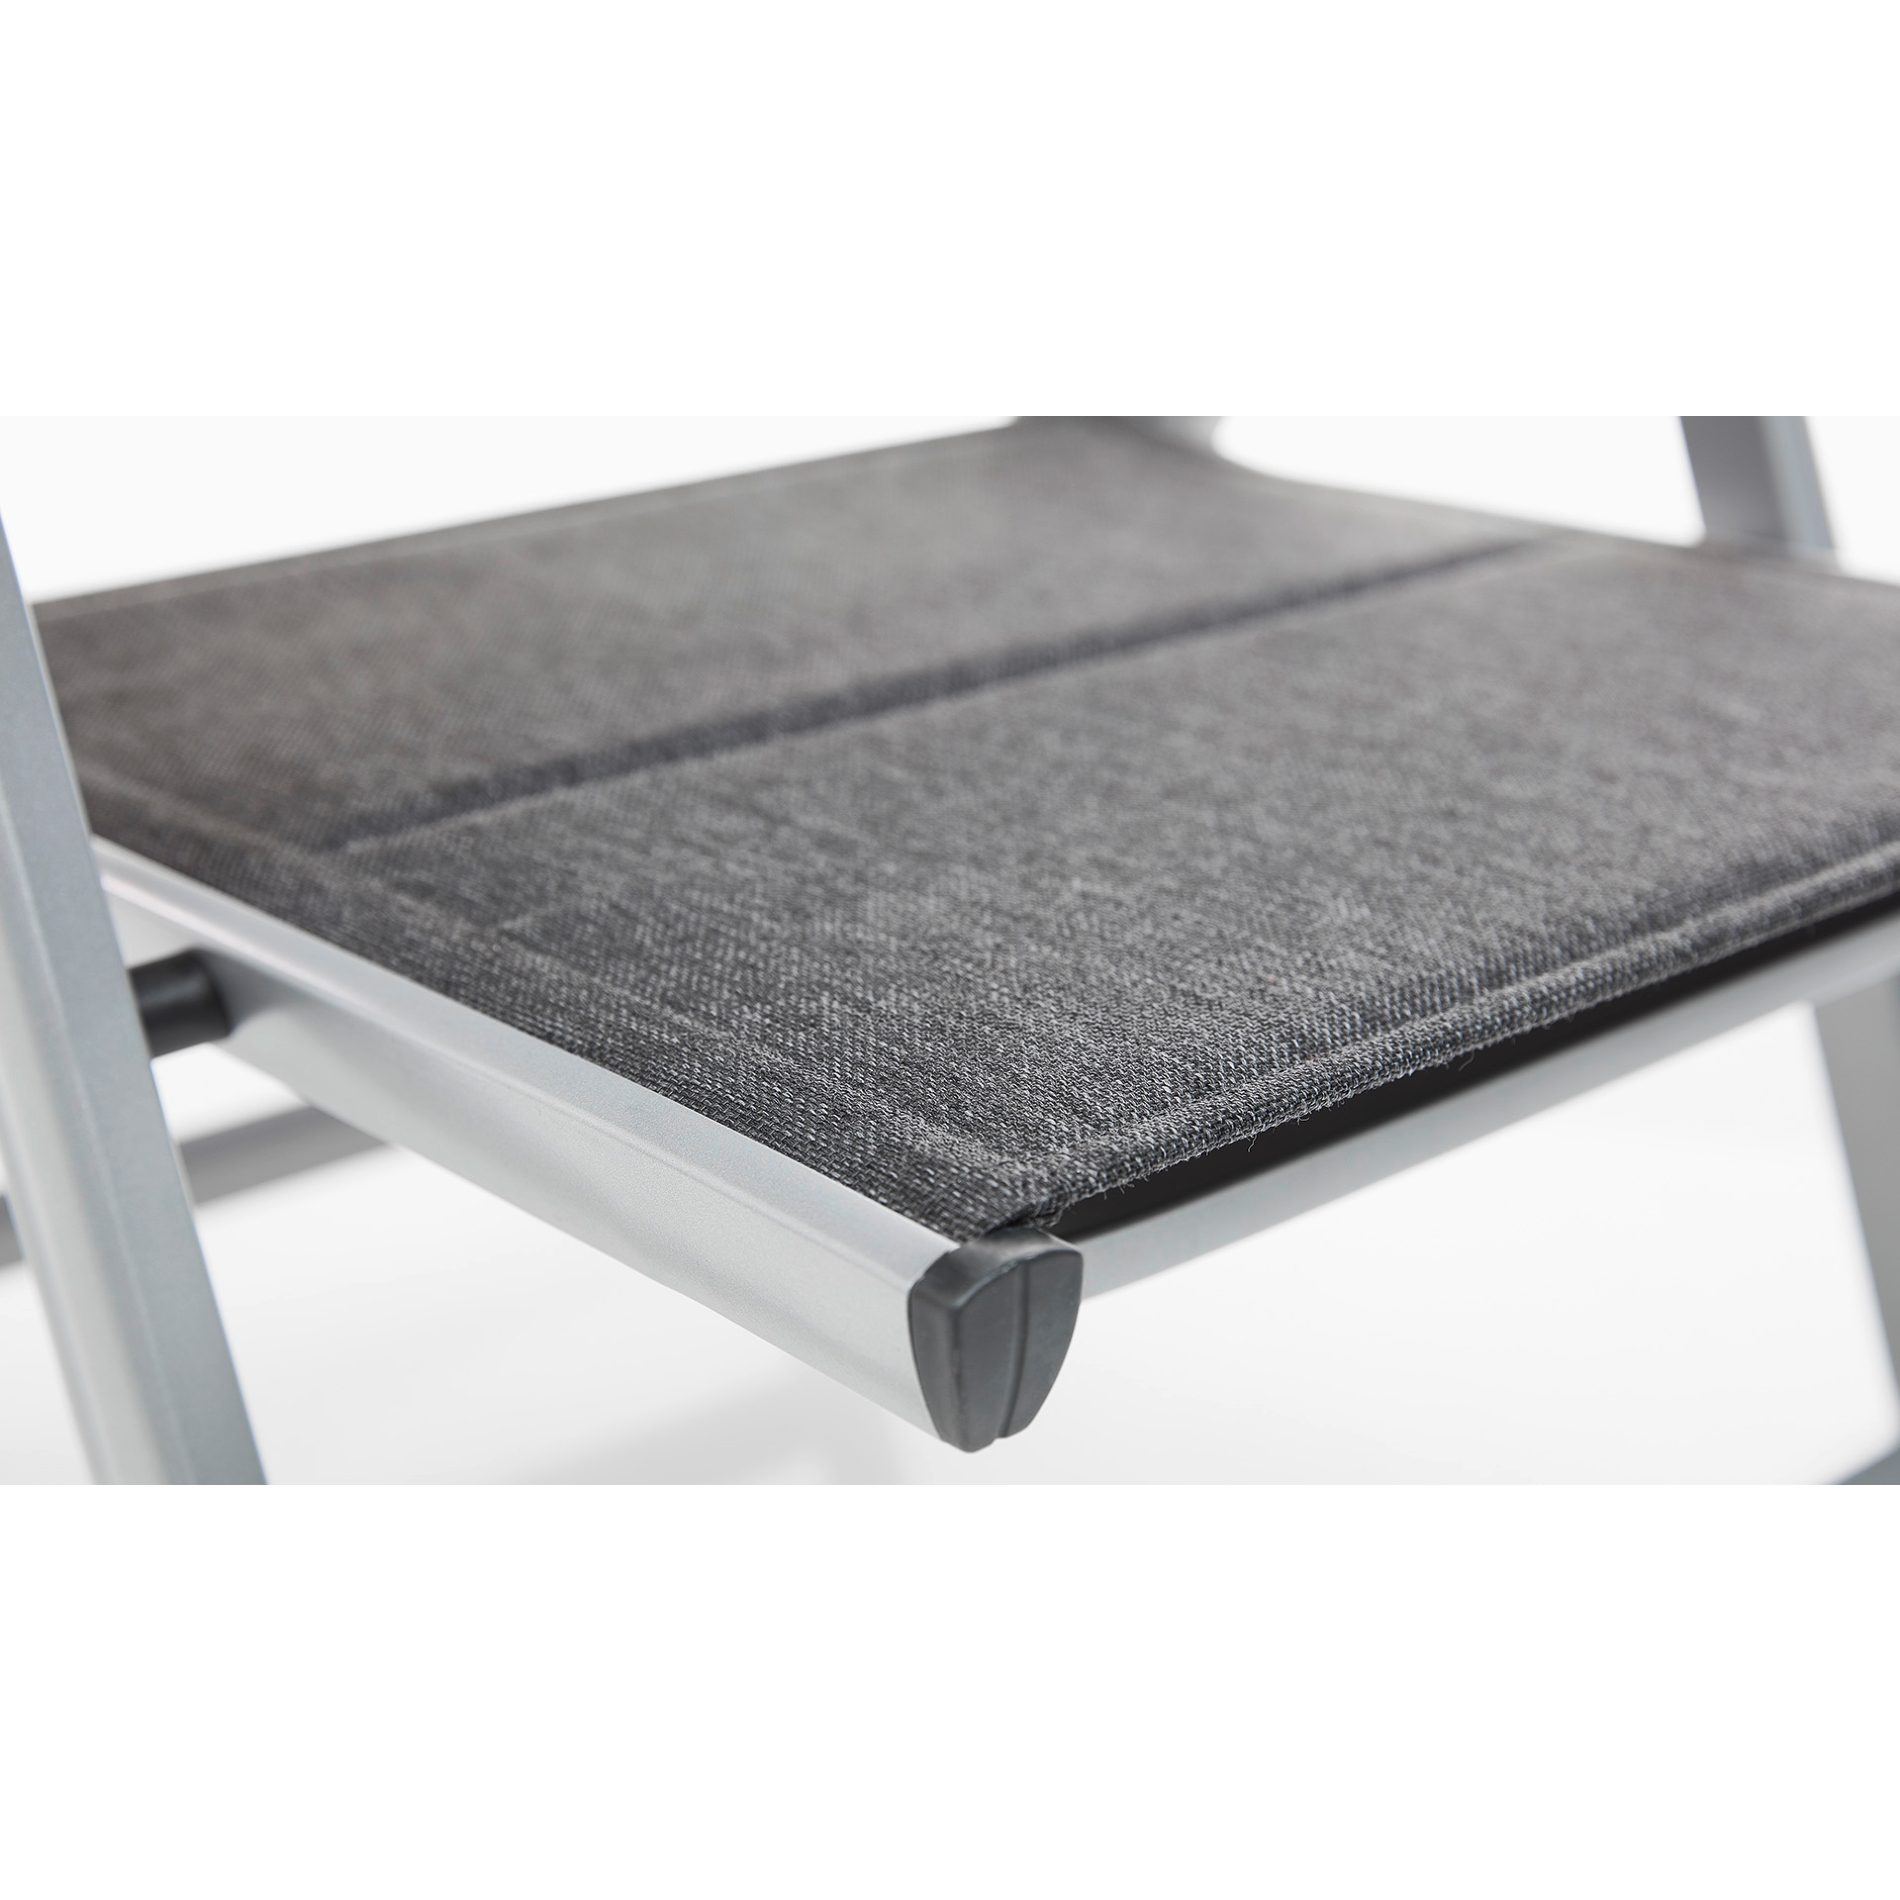 Kettler “Granada Padded“ Multipositionssessel, Gestell Aluminium silber, Sitzfläche Textilgewebe anthrazit meliert